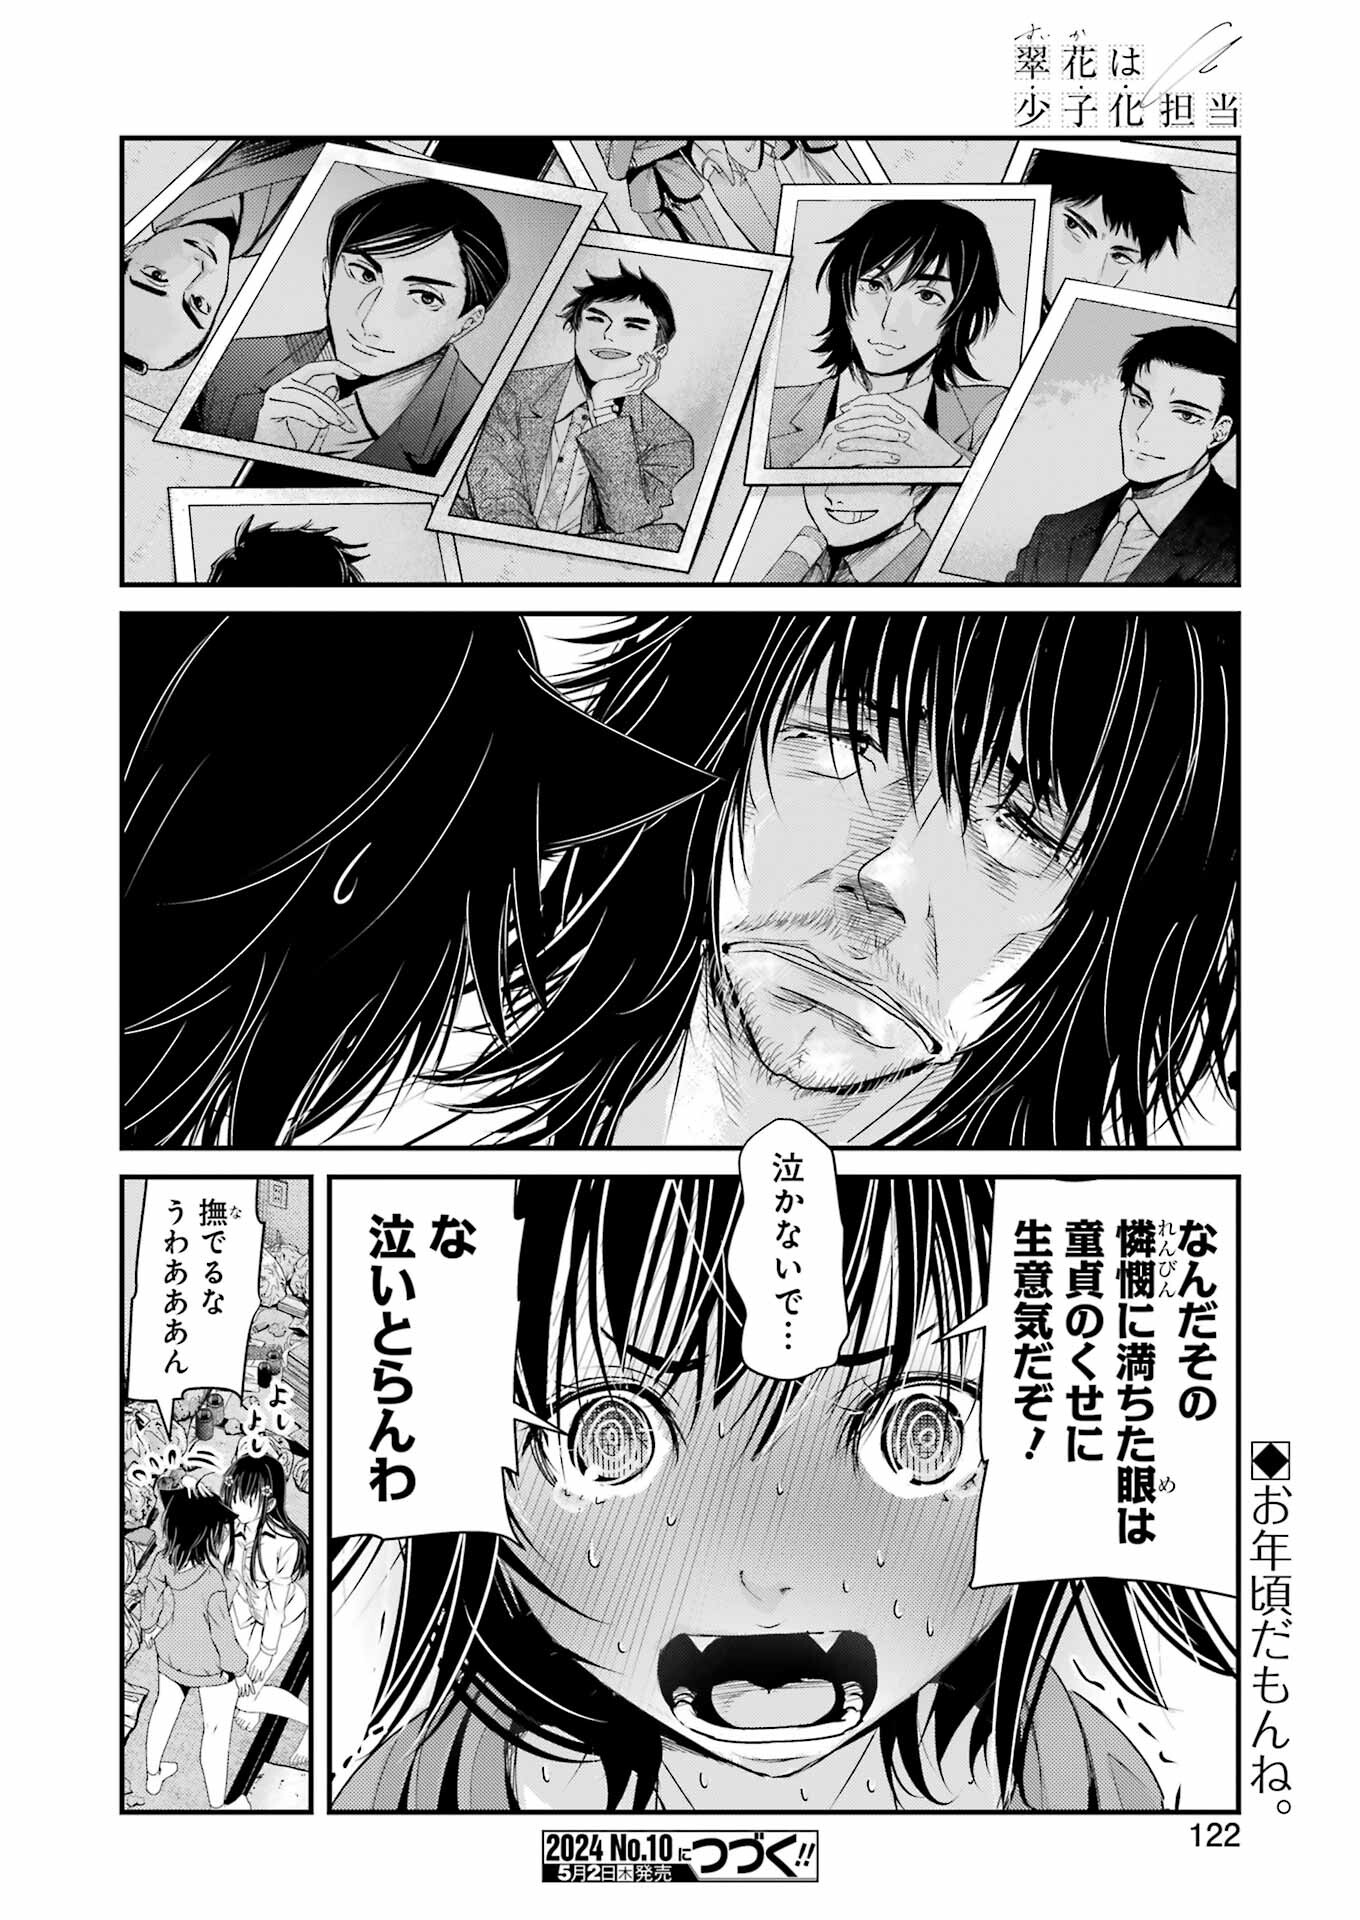 Suika wa Shoushika Tantou - Chapter 8 - Page 24